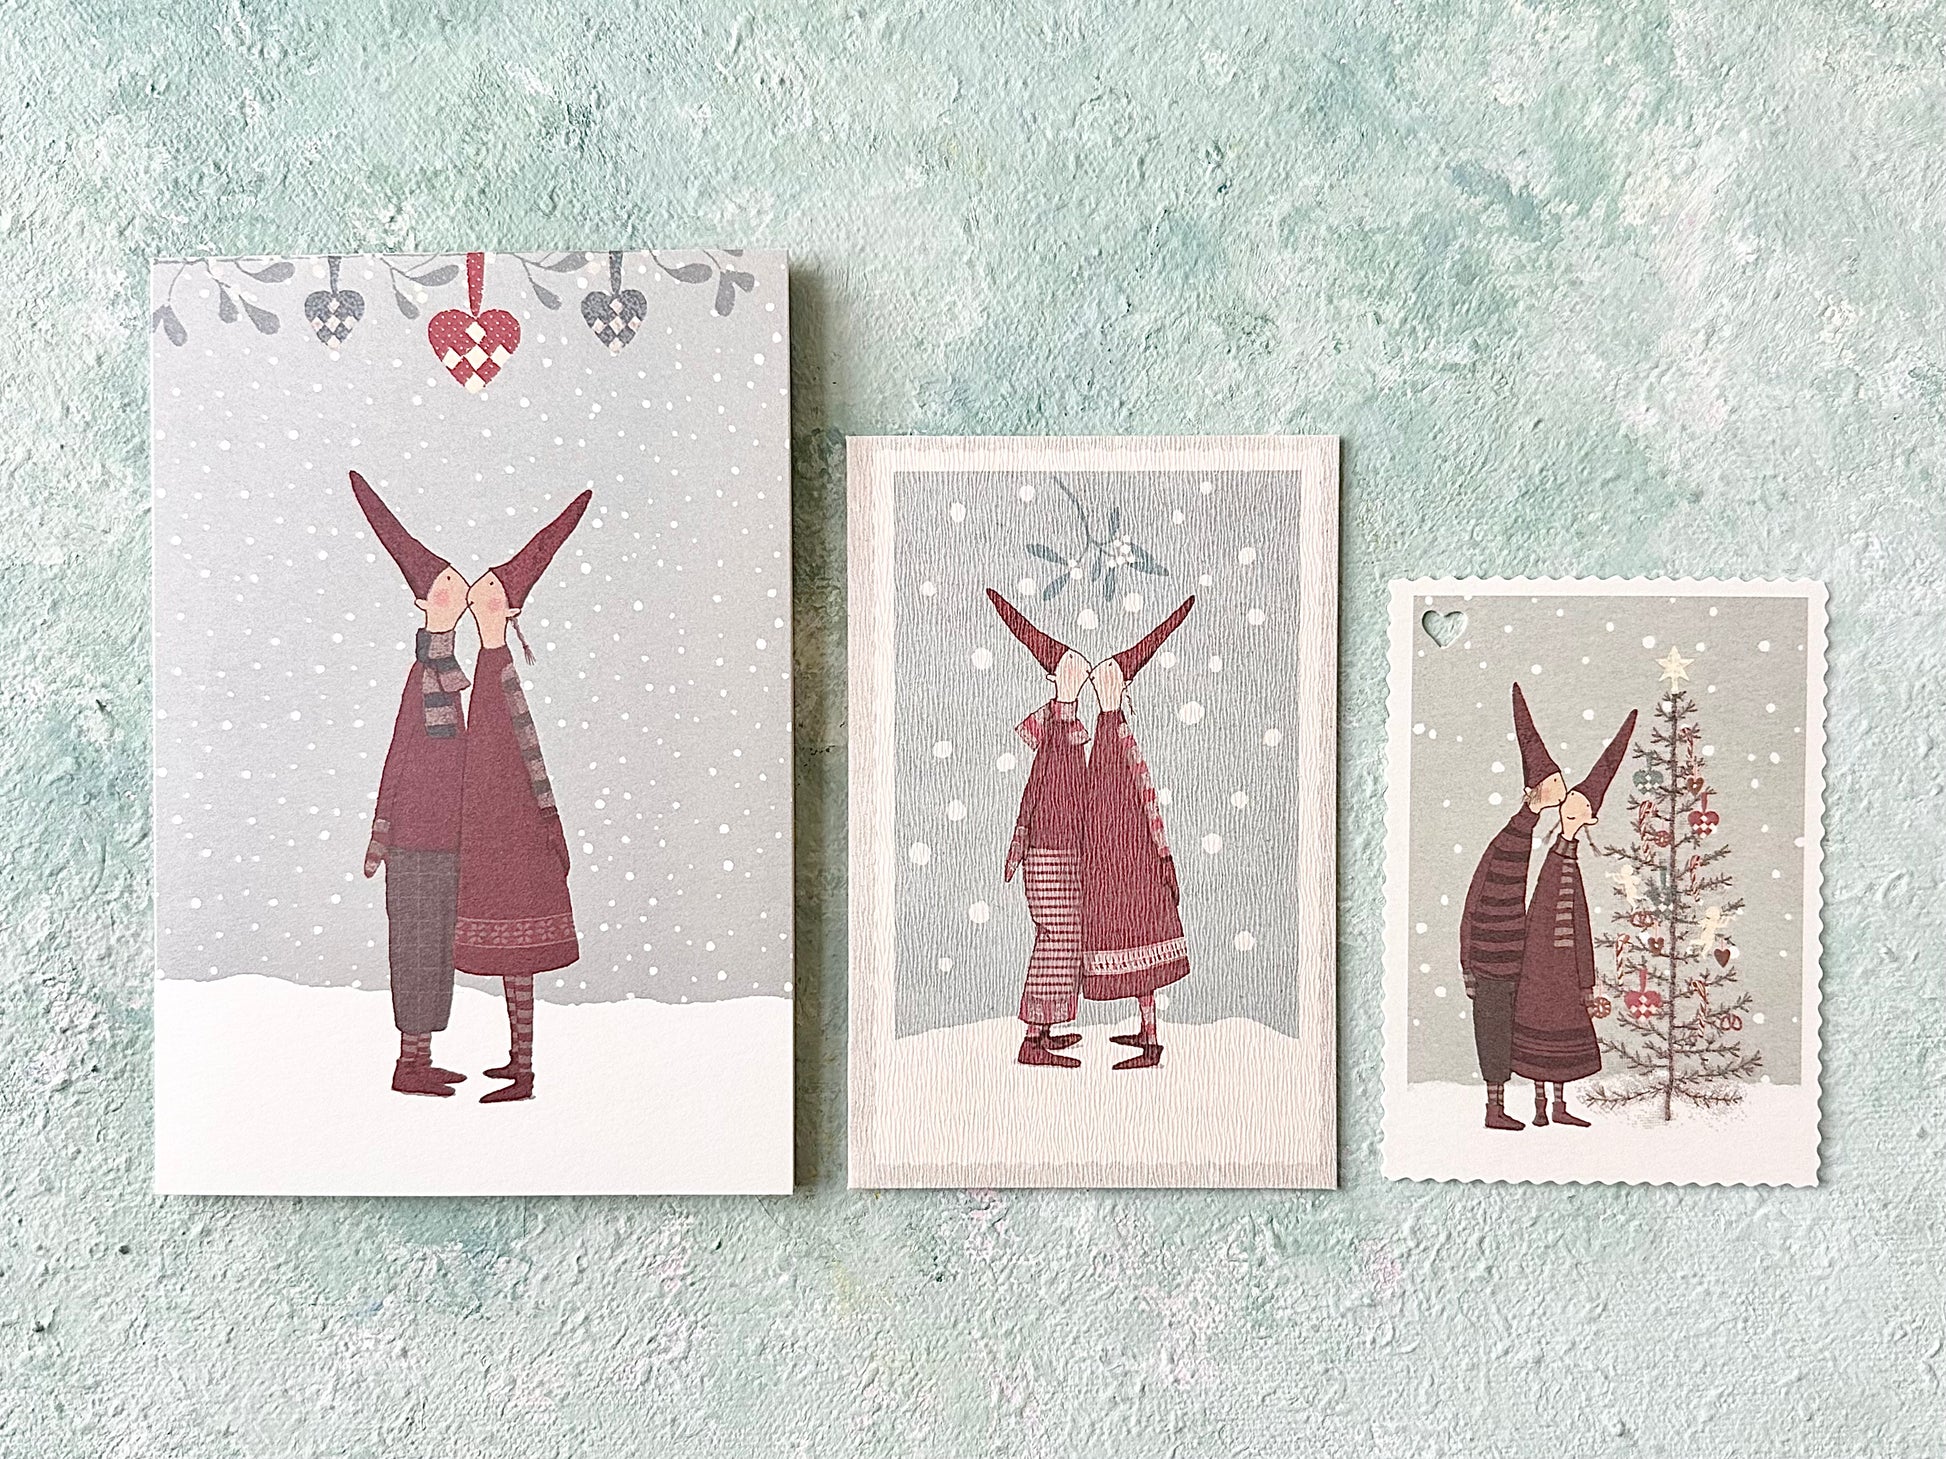 Double Christmas Card “Dancing Mice” - 2012